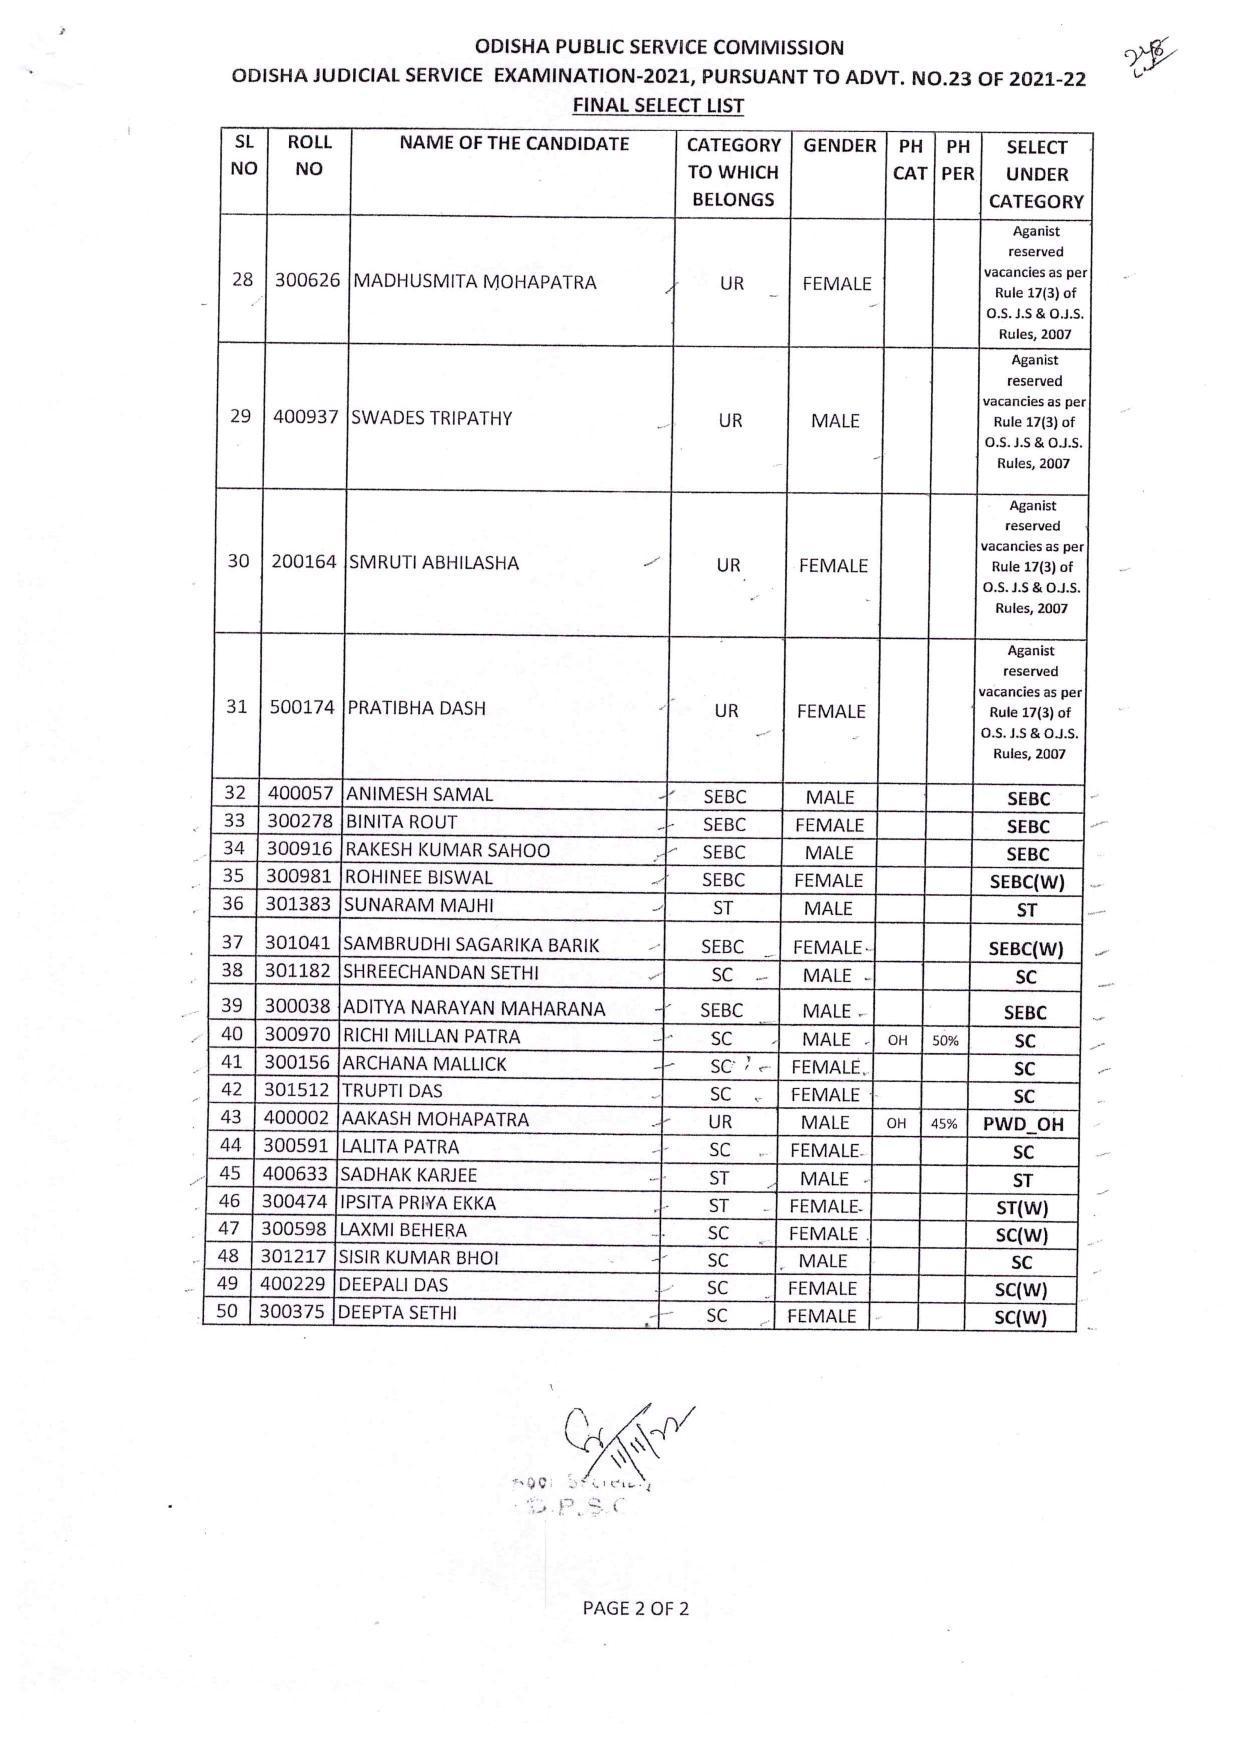 OPSC Odisha Judicial Service Civil Judge Result 2022 - Final Result Released - Page 2